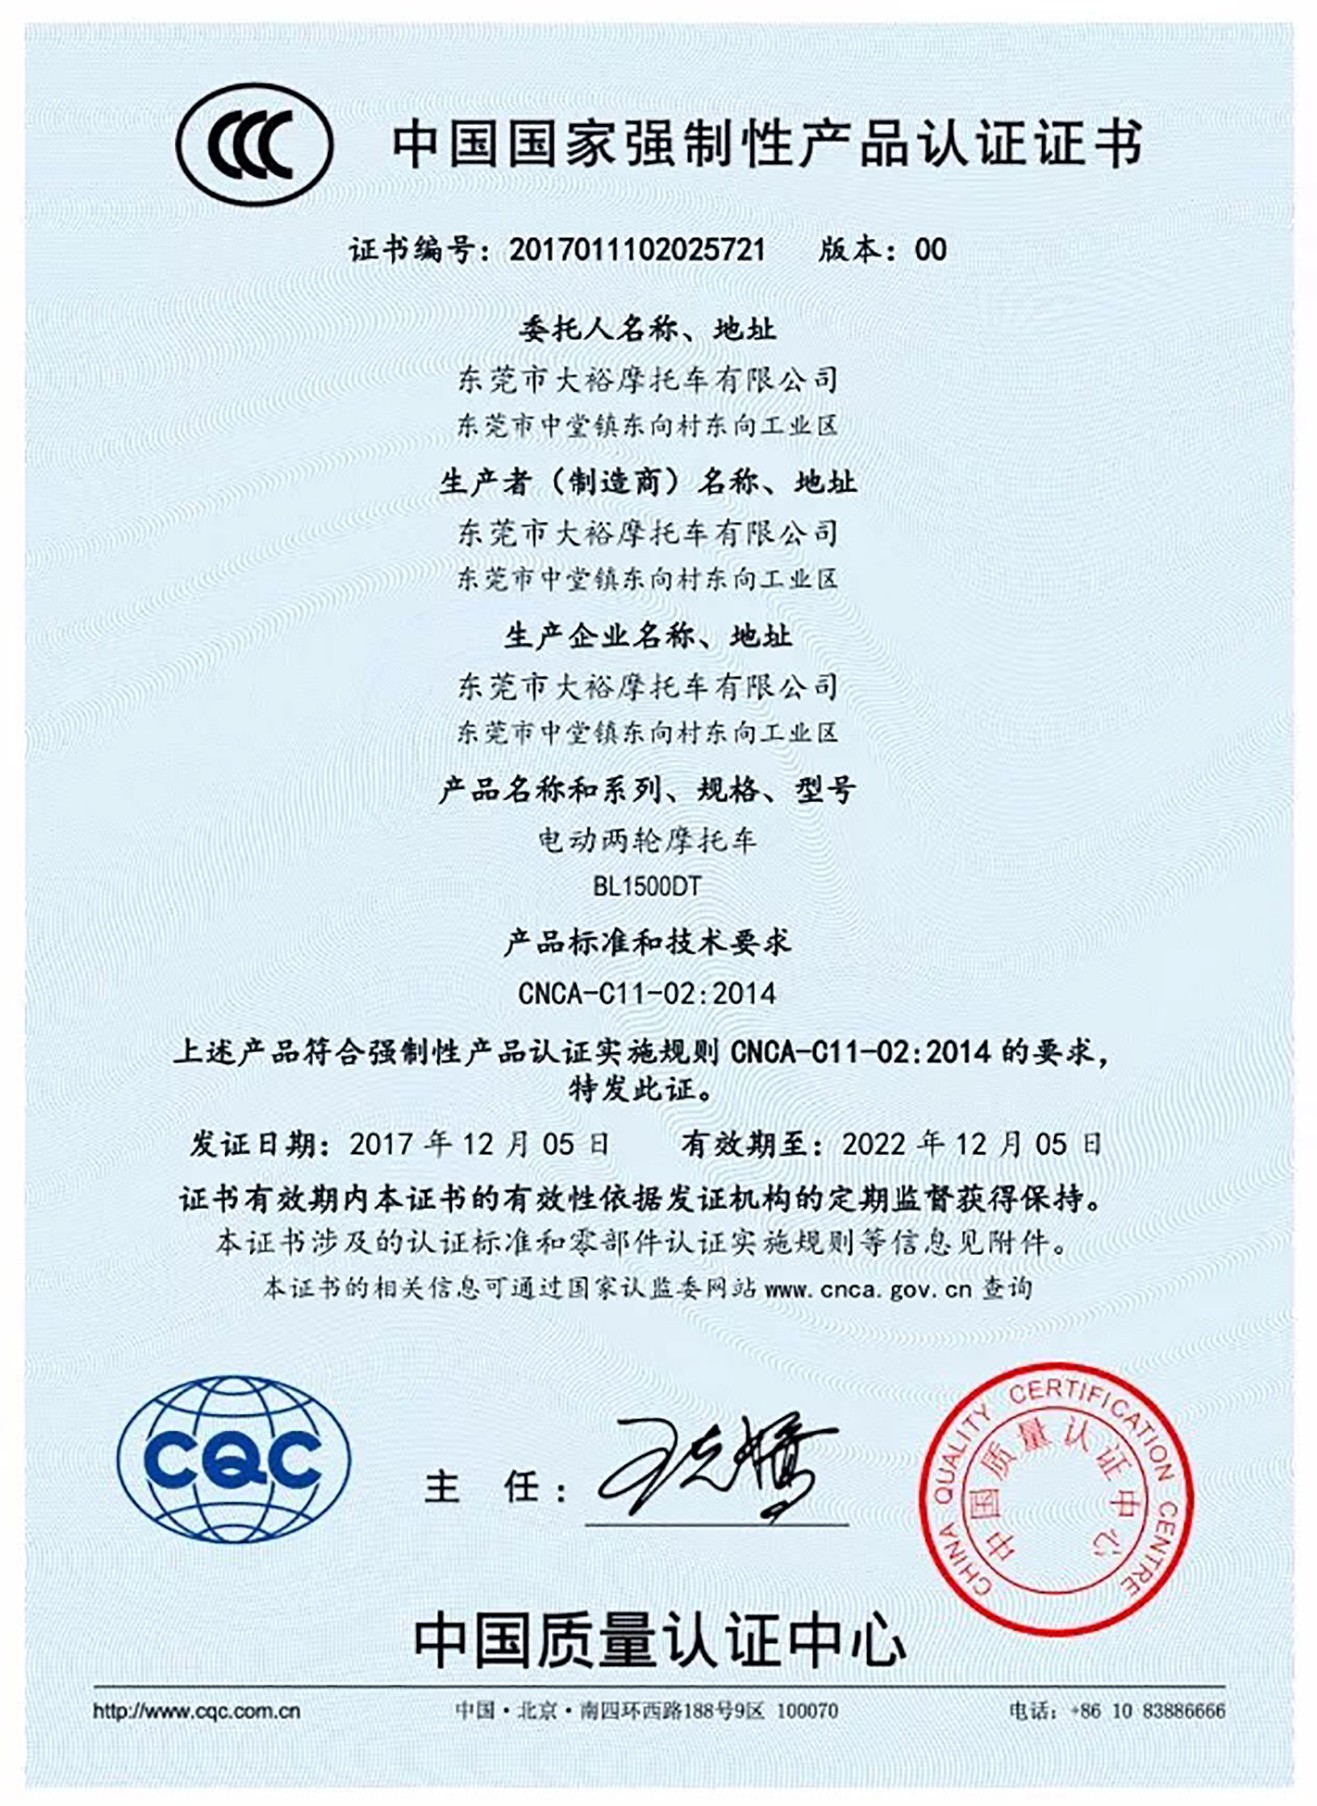 Certificado CCC